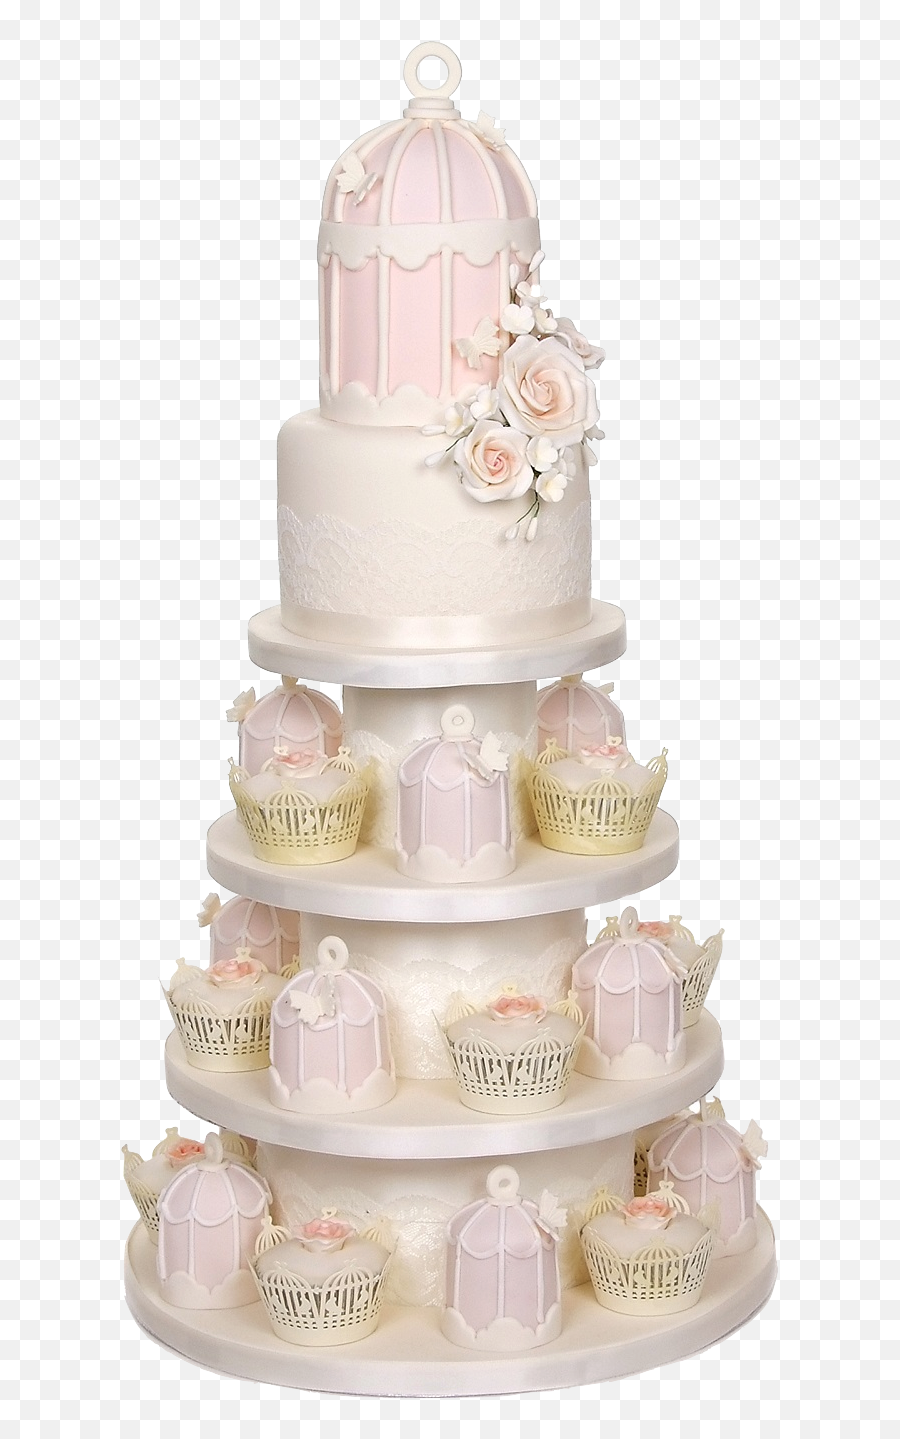 Download Hd One Fine Day - Wedding Cake Transparent Png Wedding Invitation,Wedding Cake Png